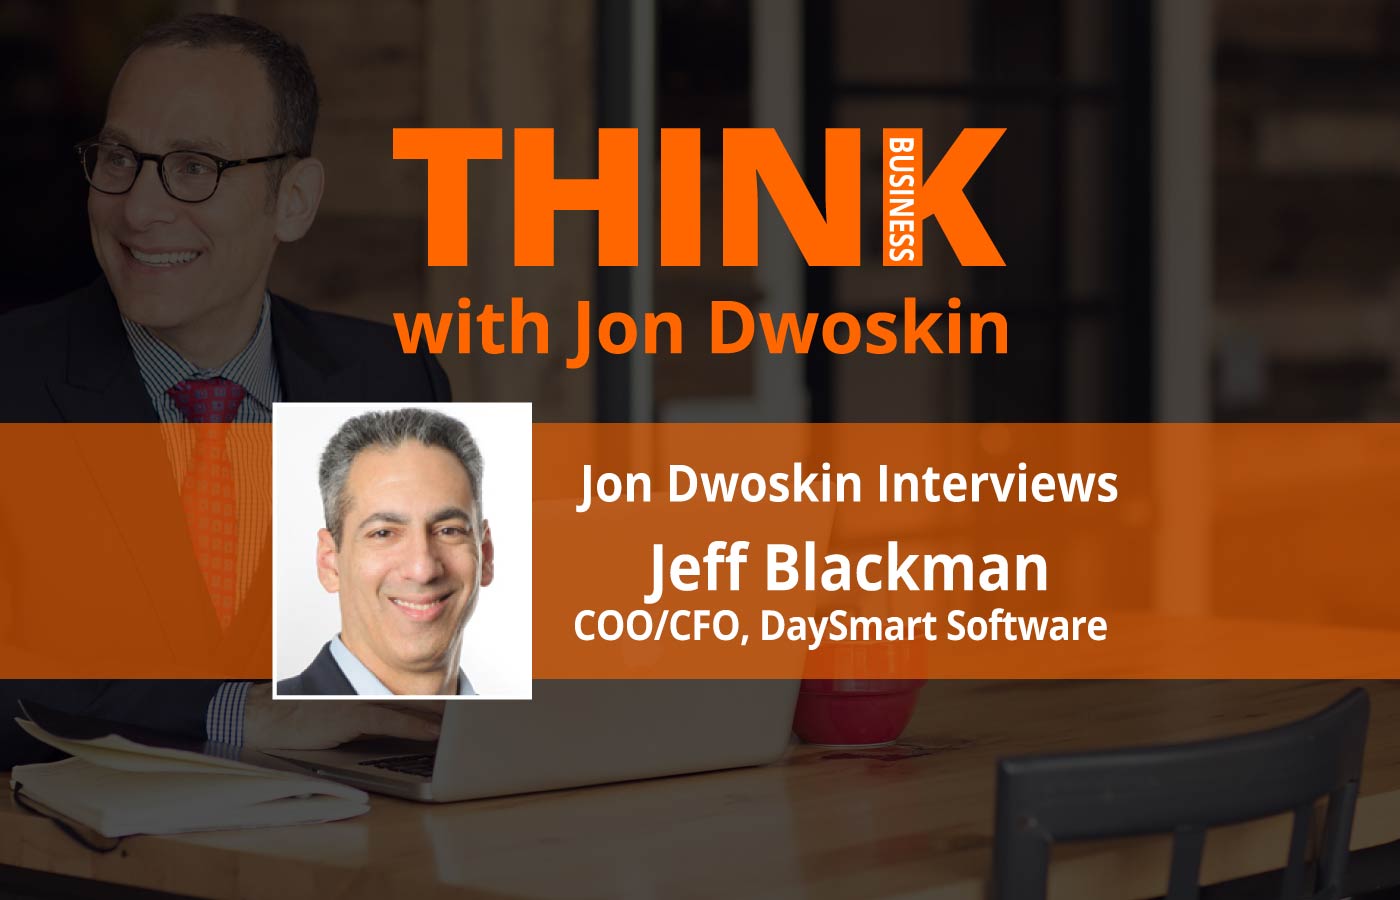 THINK Business: Jon Dwoskin Interviews Jeff Blackman, COO/CFO at DaySmart Software 